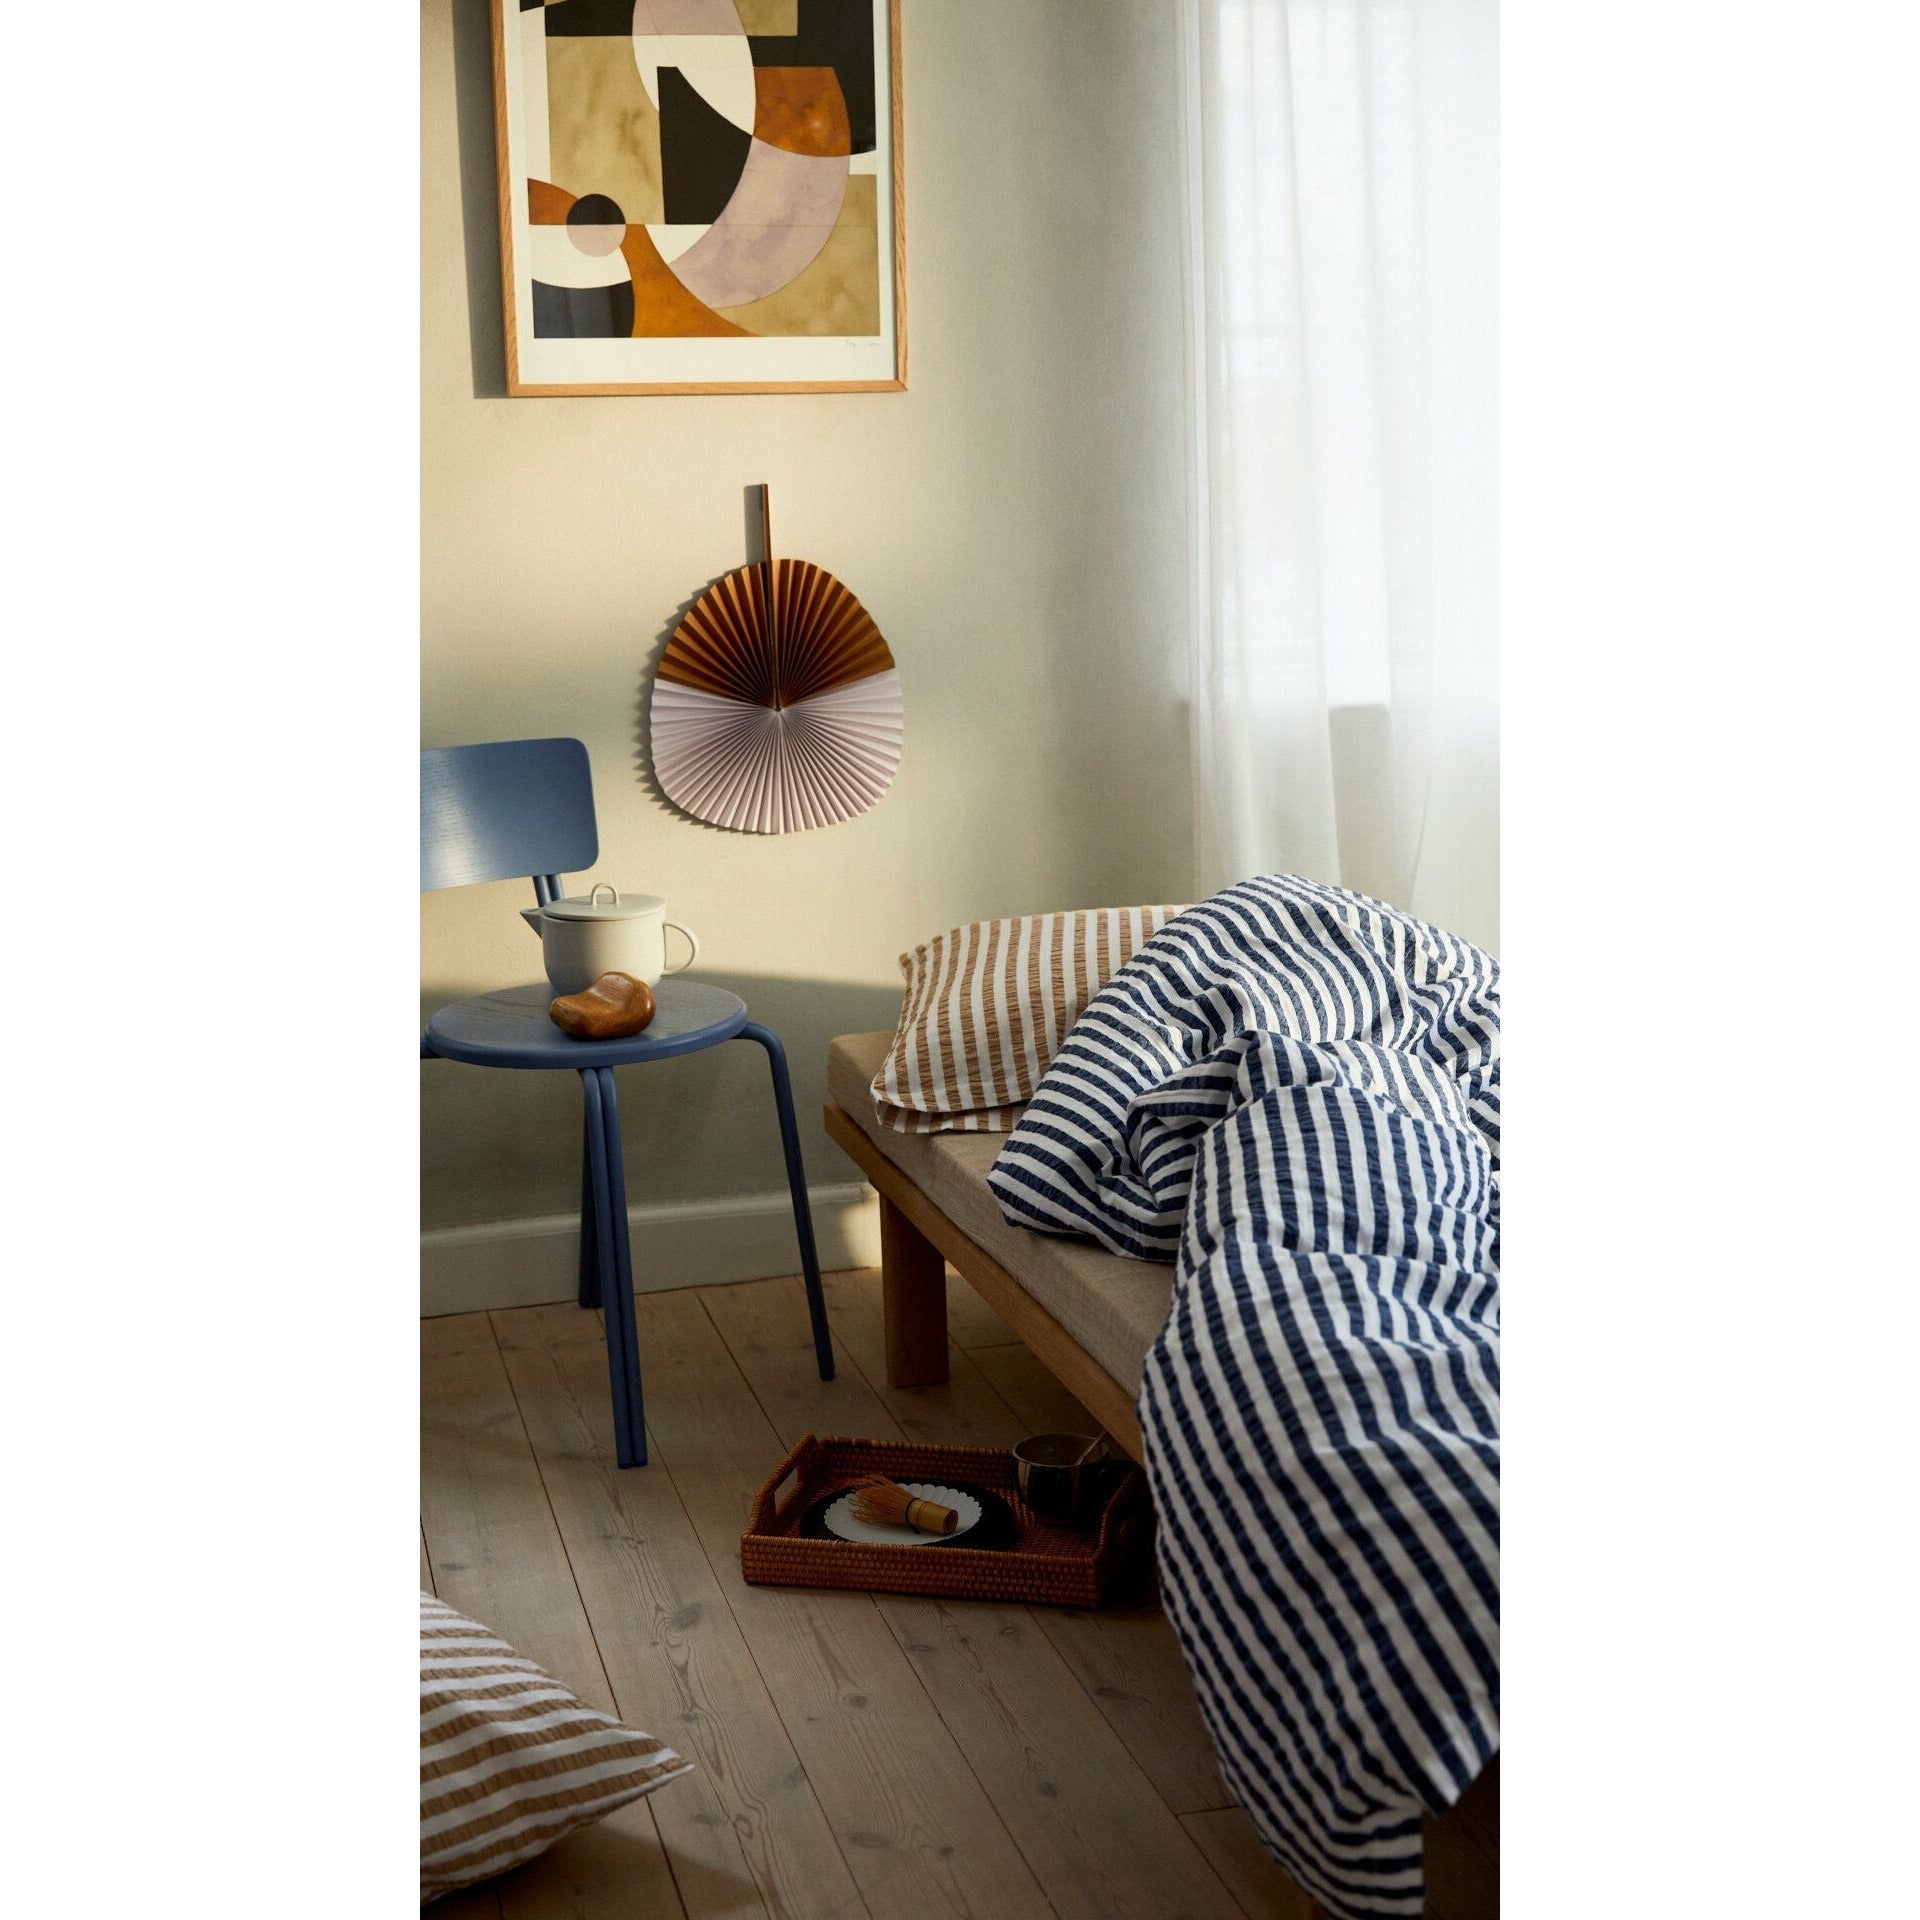 Juna Bæk & Bølge linjer sängkläder 140x200 cm, mörkblå/vit